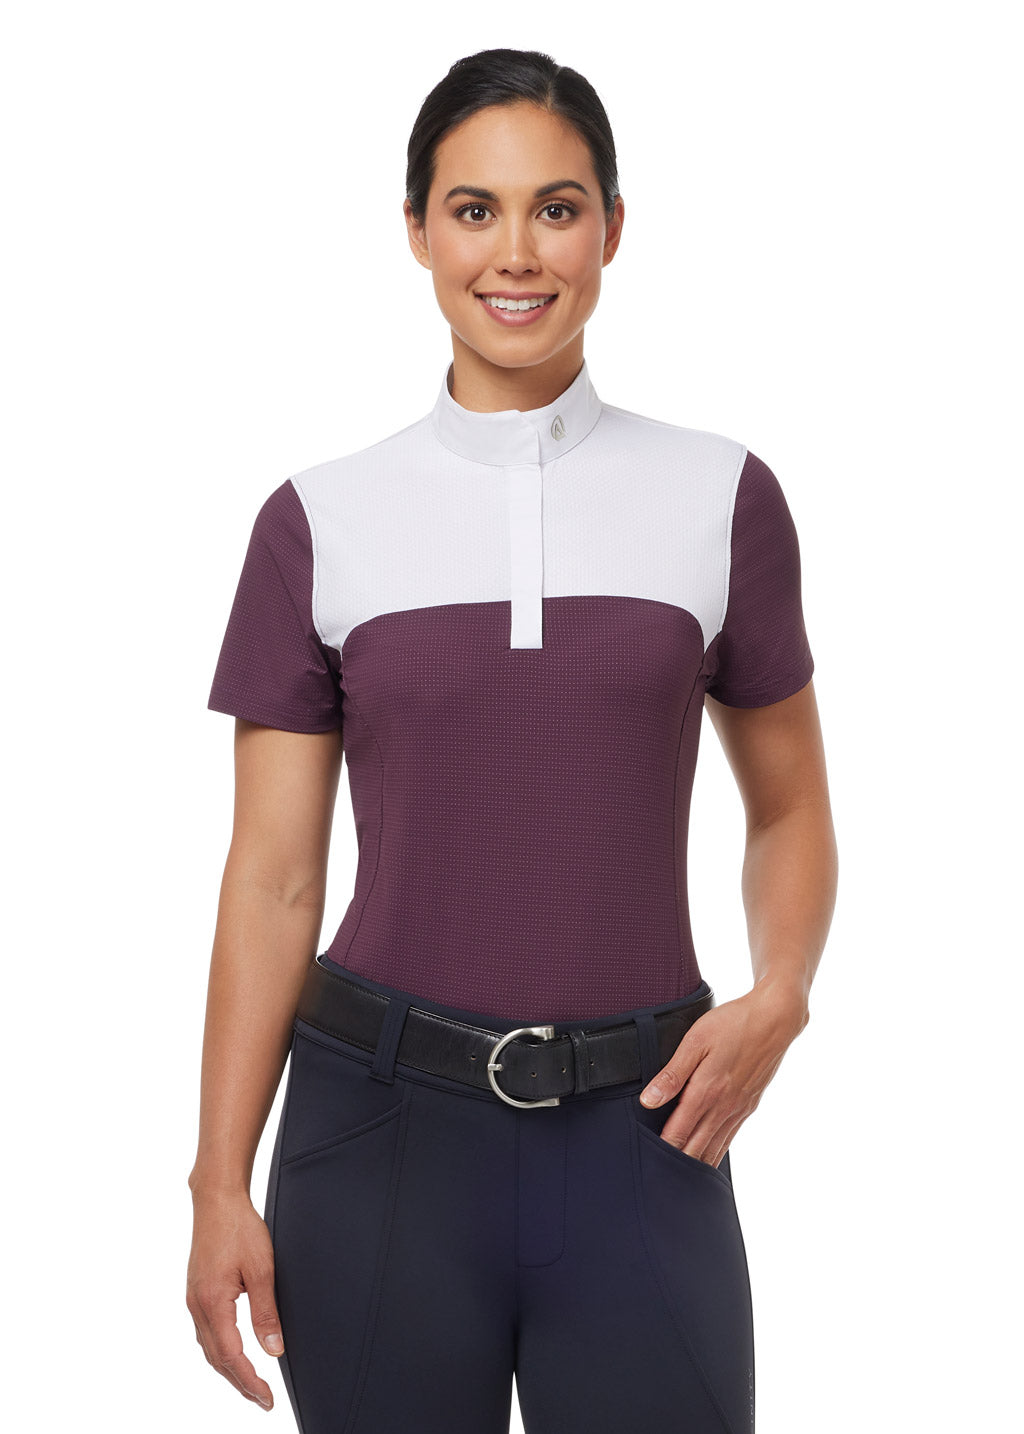 VINEYARD::variant::Affinity Short Sleeve Show Shirt